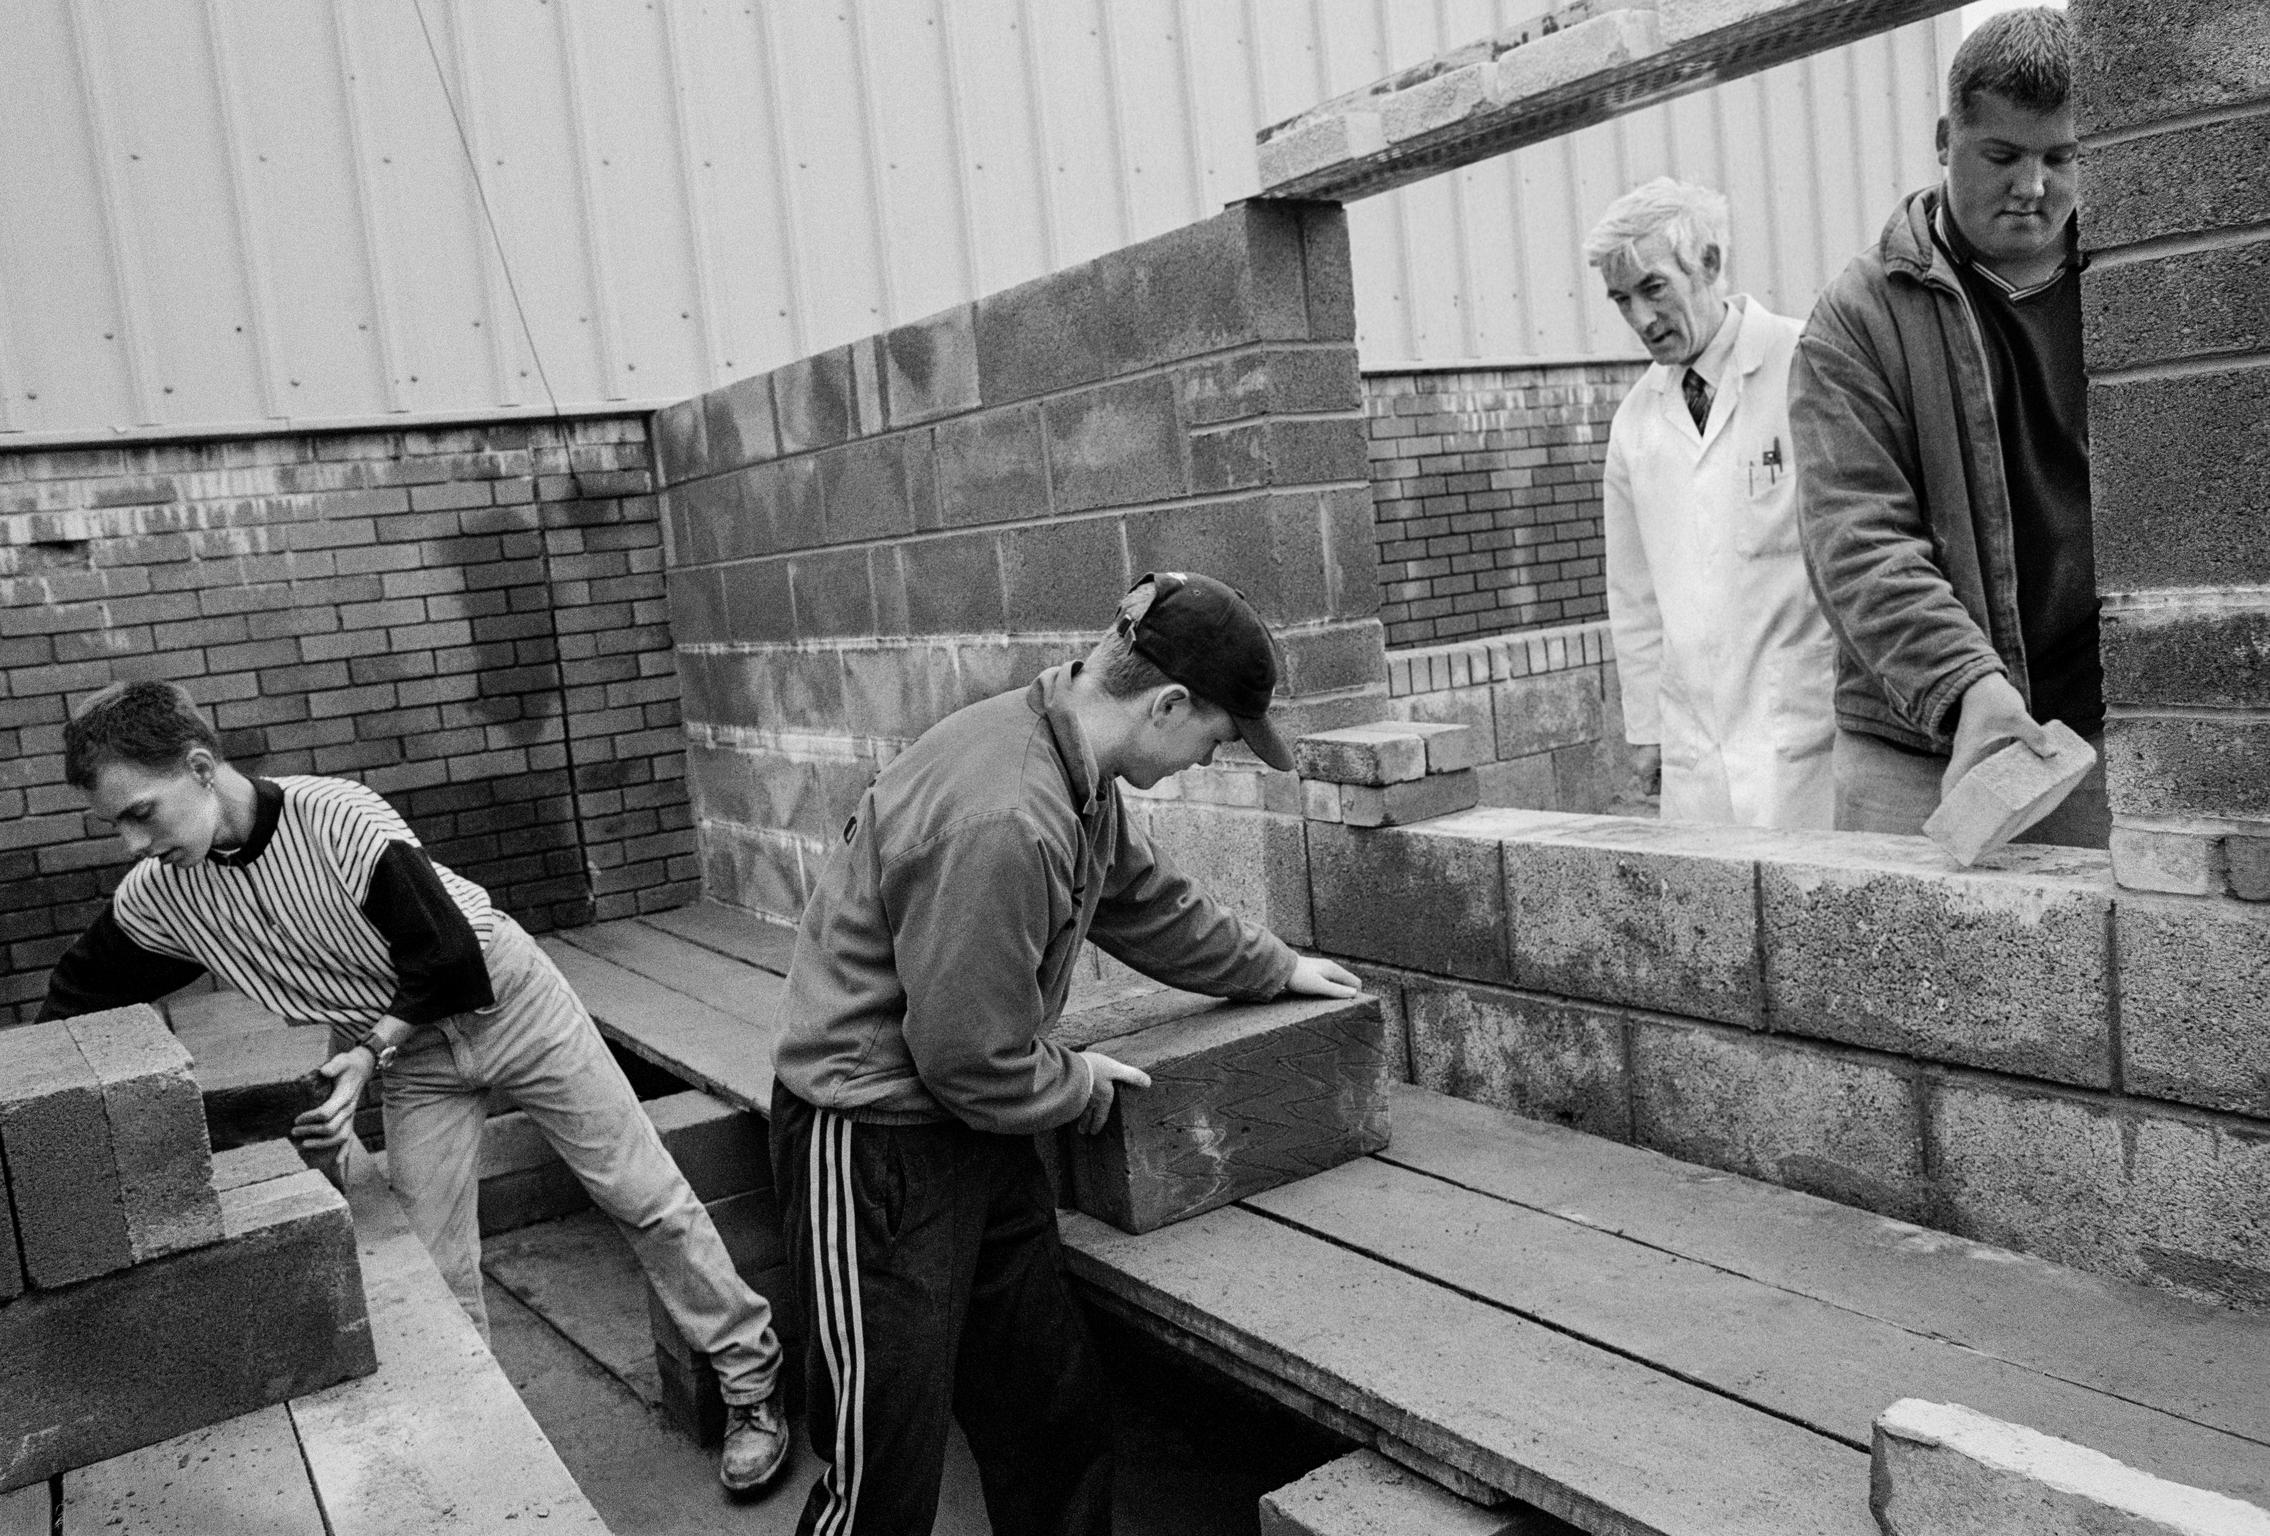 Brick laying classes. Tredegar, Wales